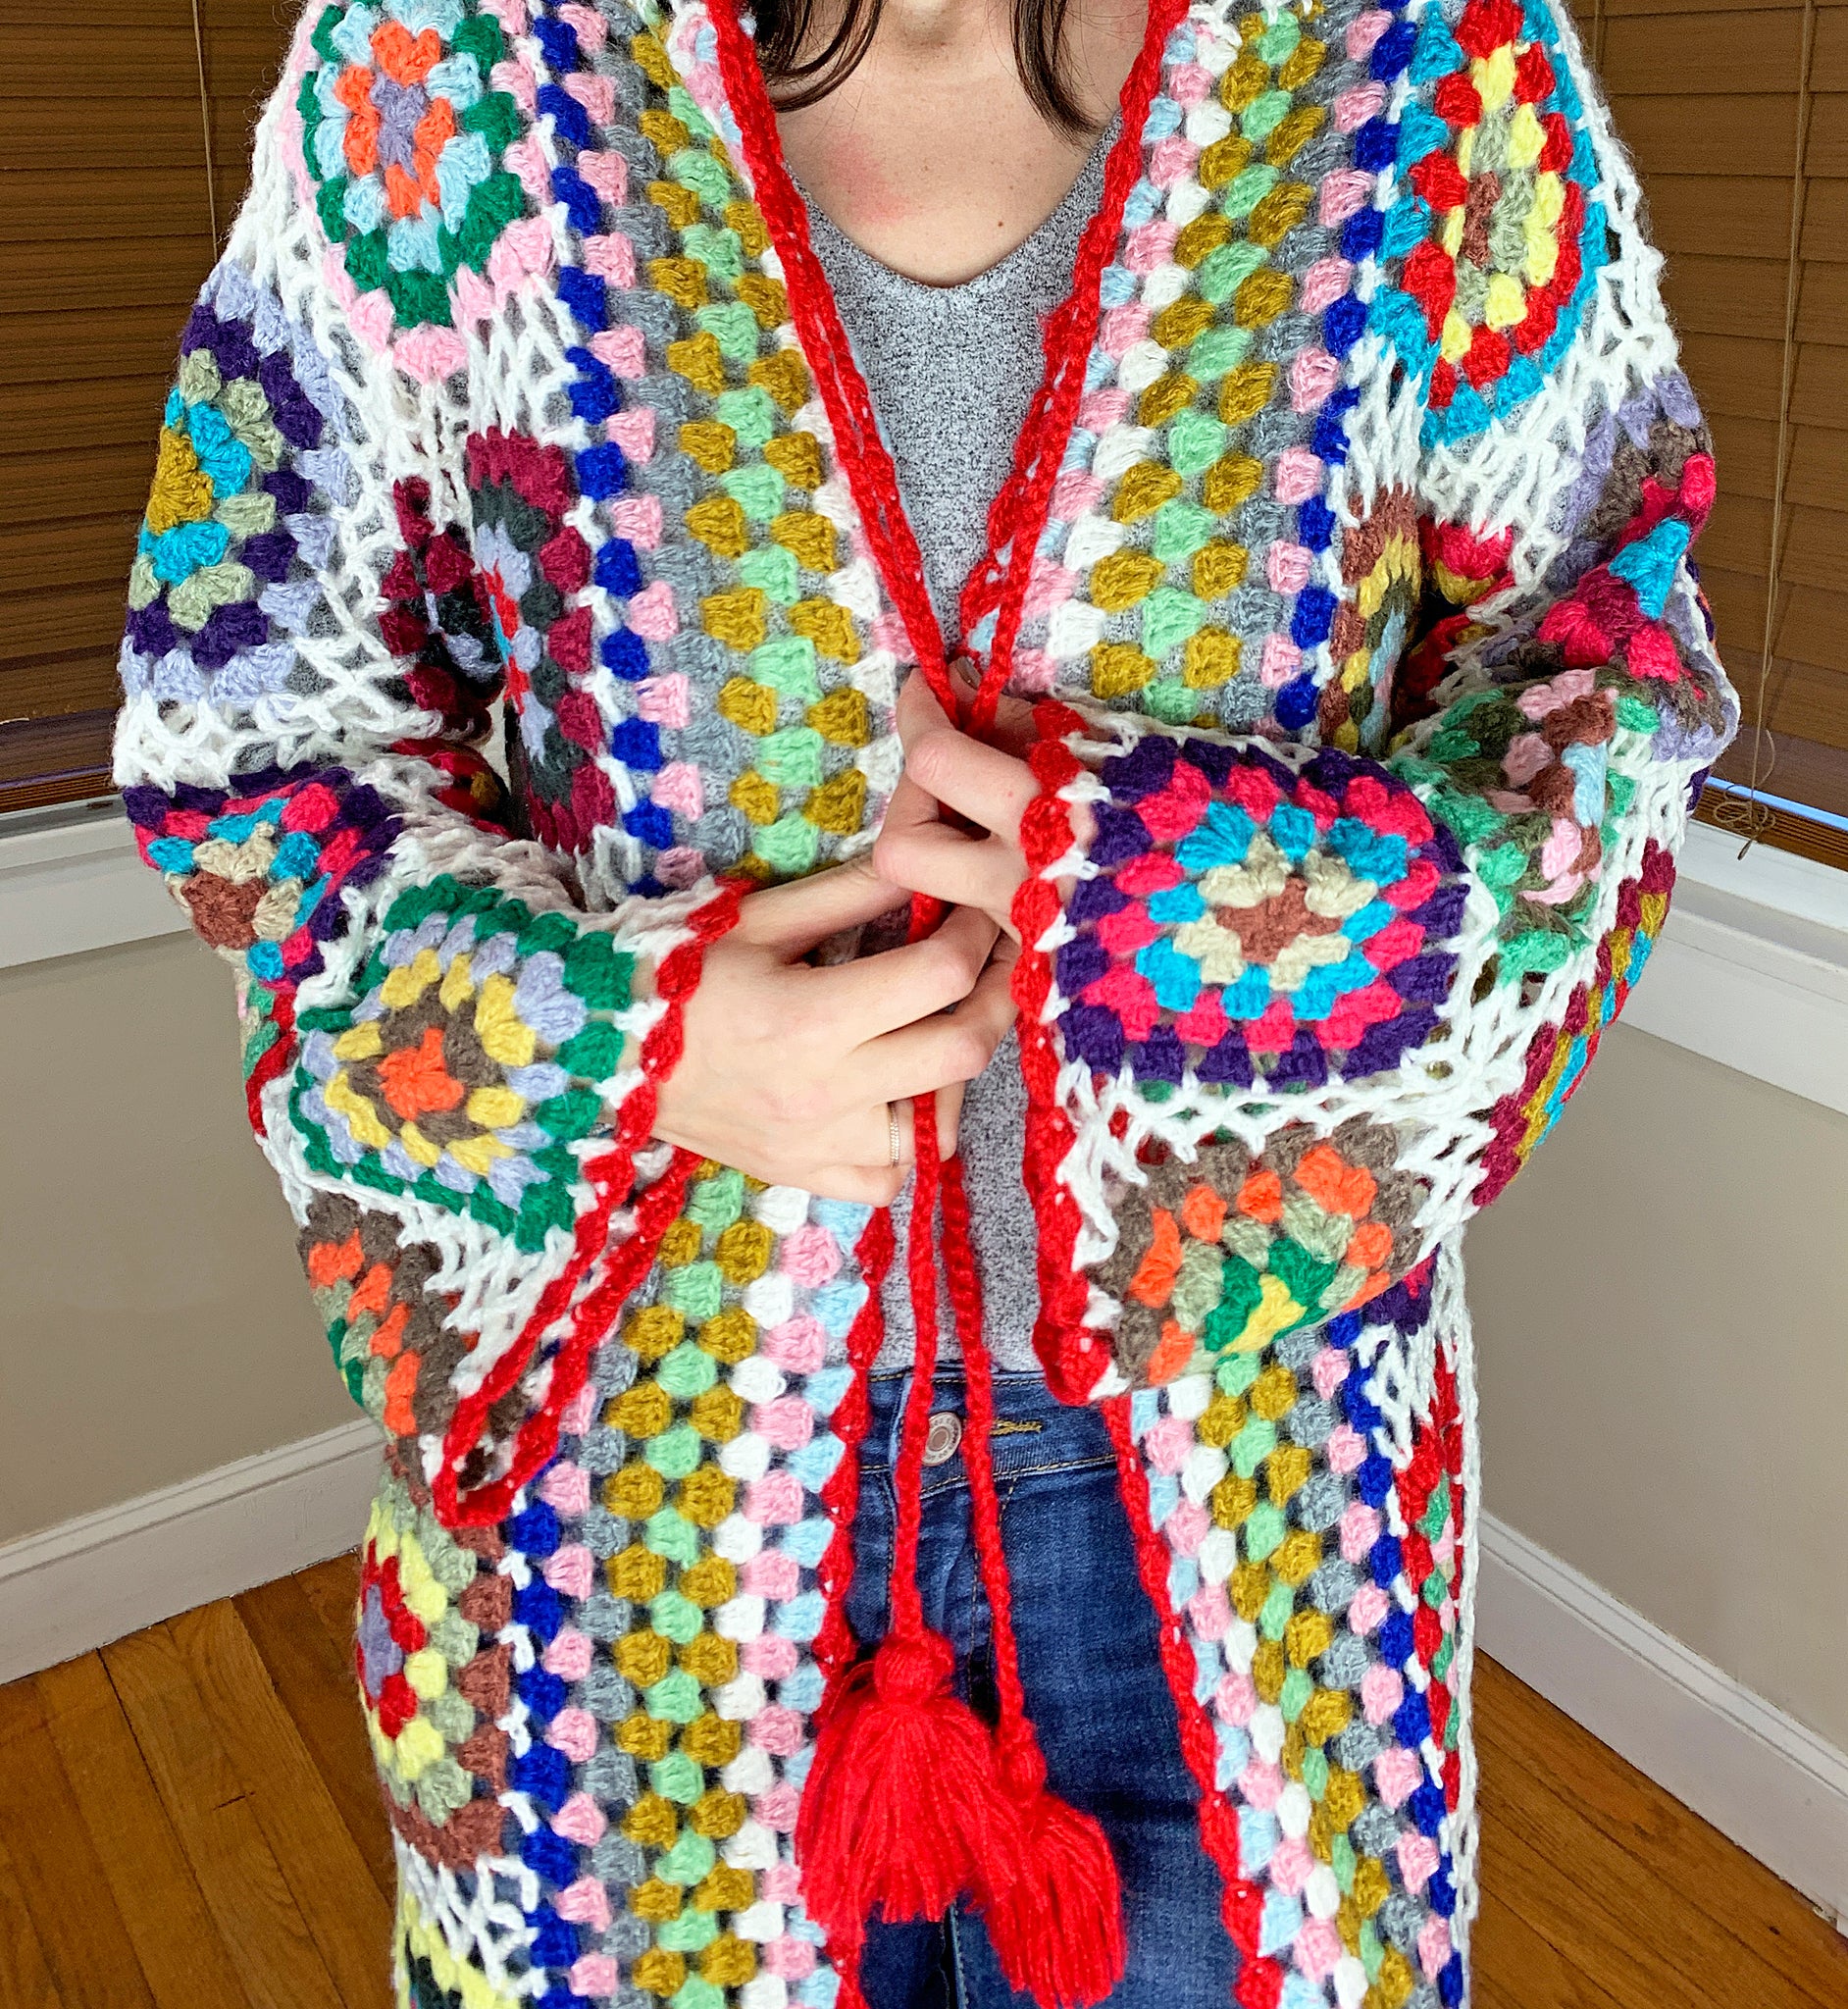 Saachi Granny Square Crocheted Long Hooded Kimono Sweater in White Multicolor